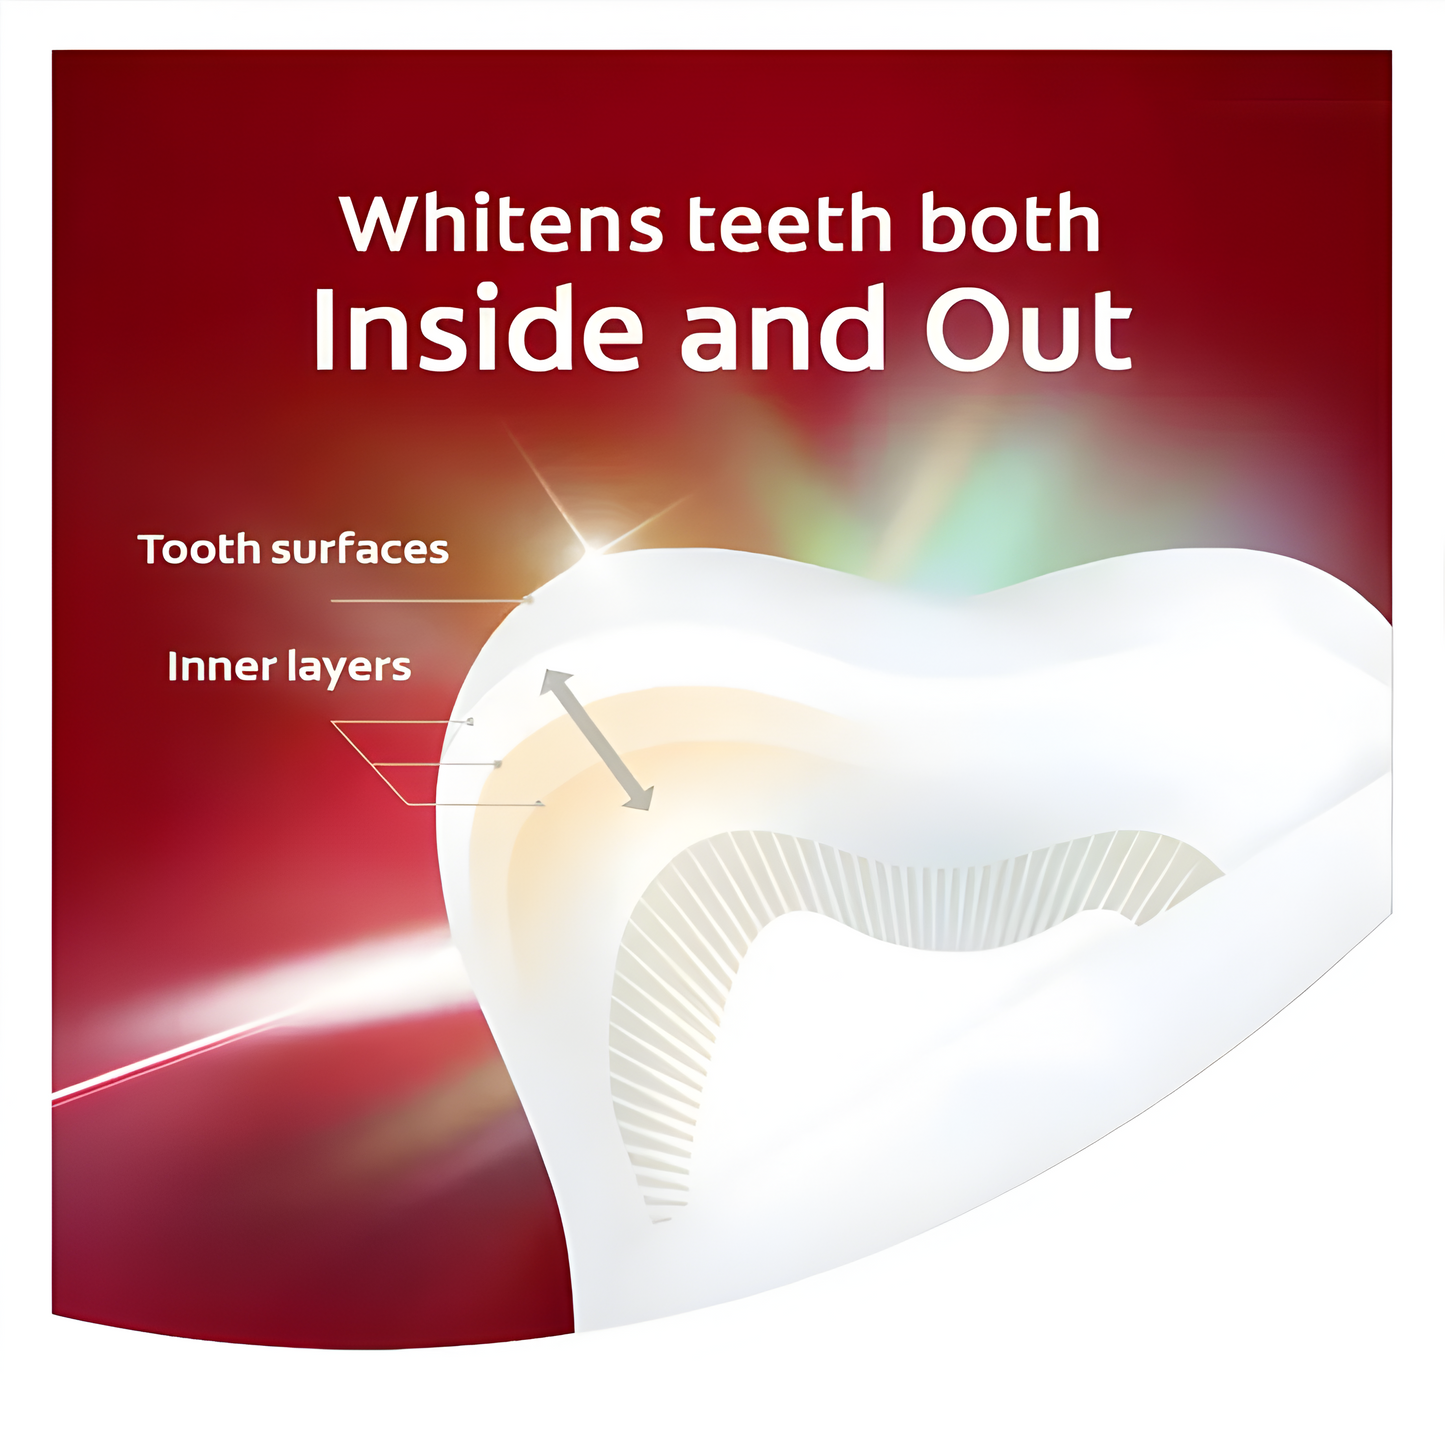 Colgate Optic White Renewal 10x dientes blancos 116gr.